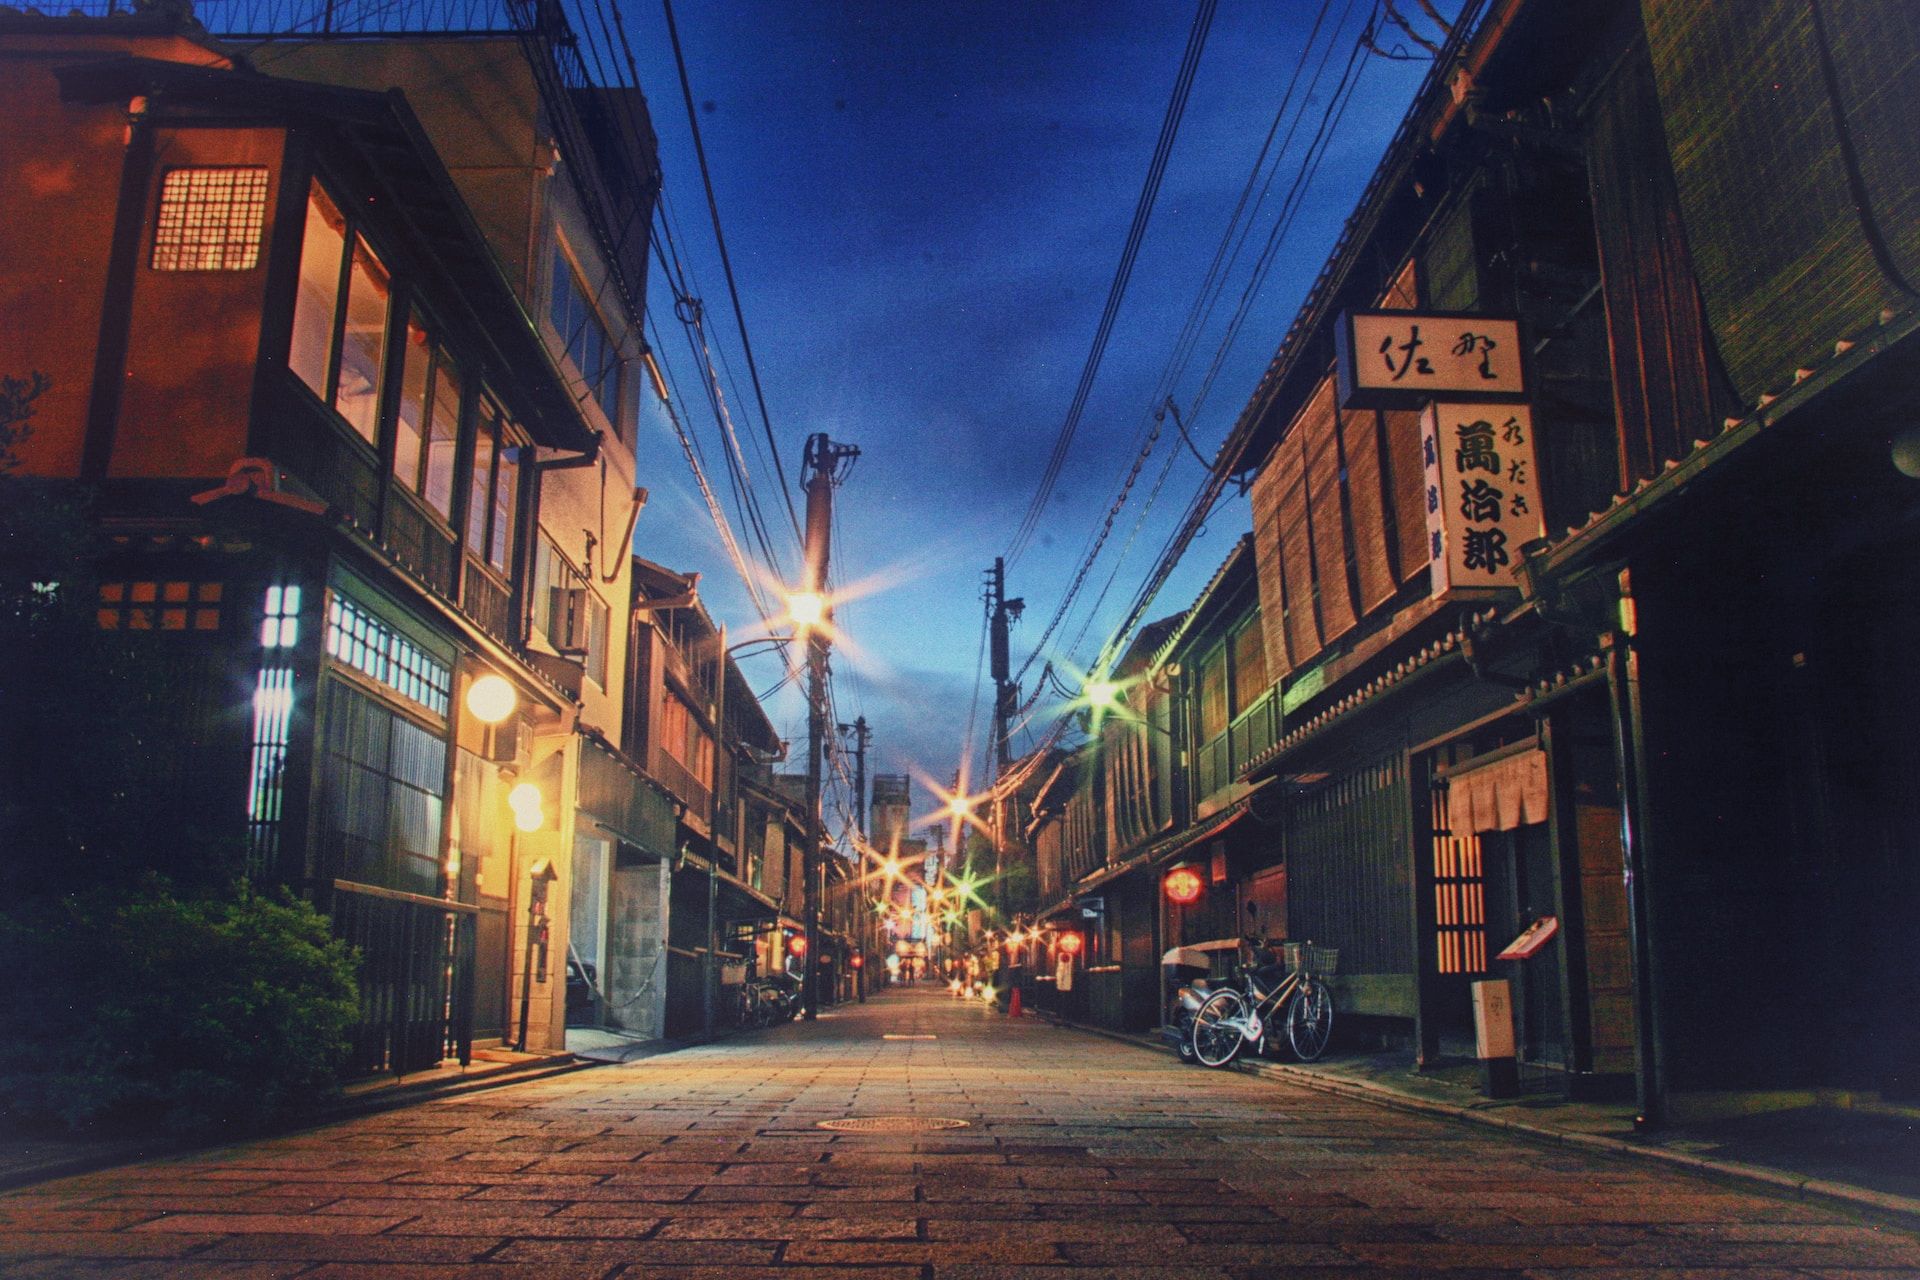 Nighttime streetscape at Kyoto, Japan